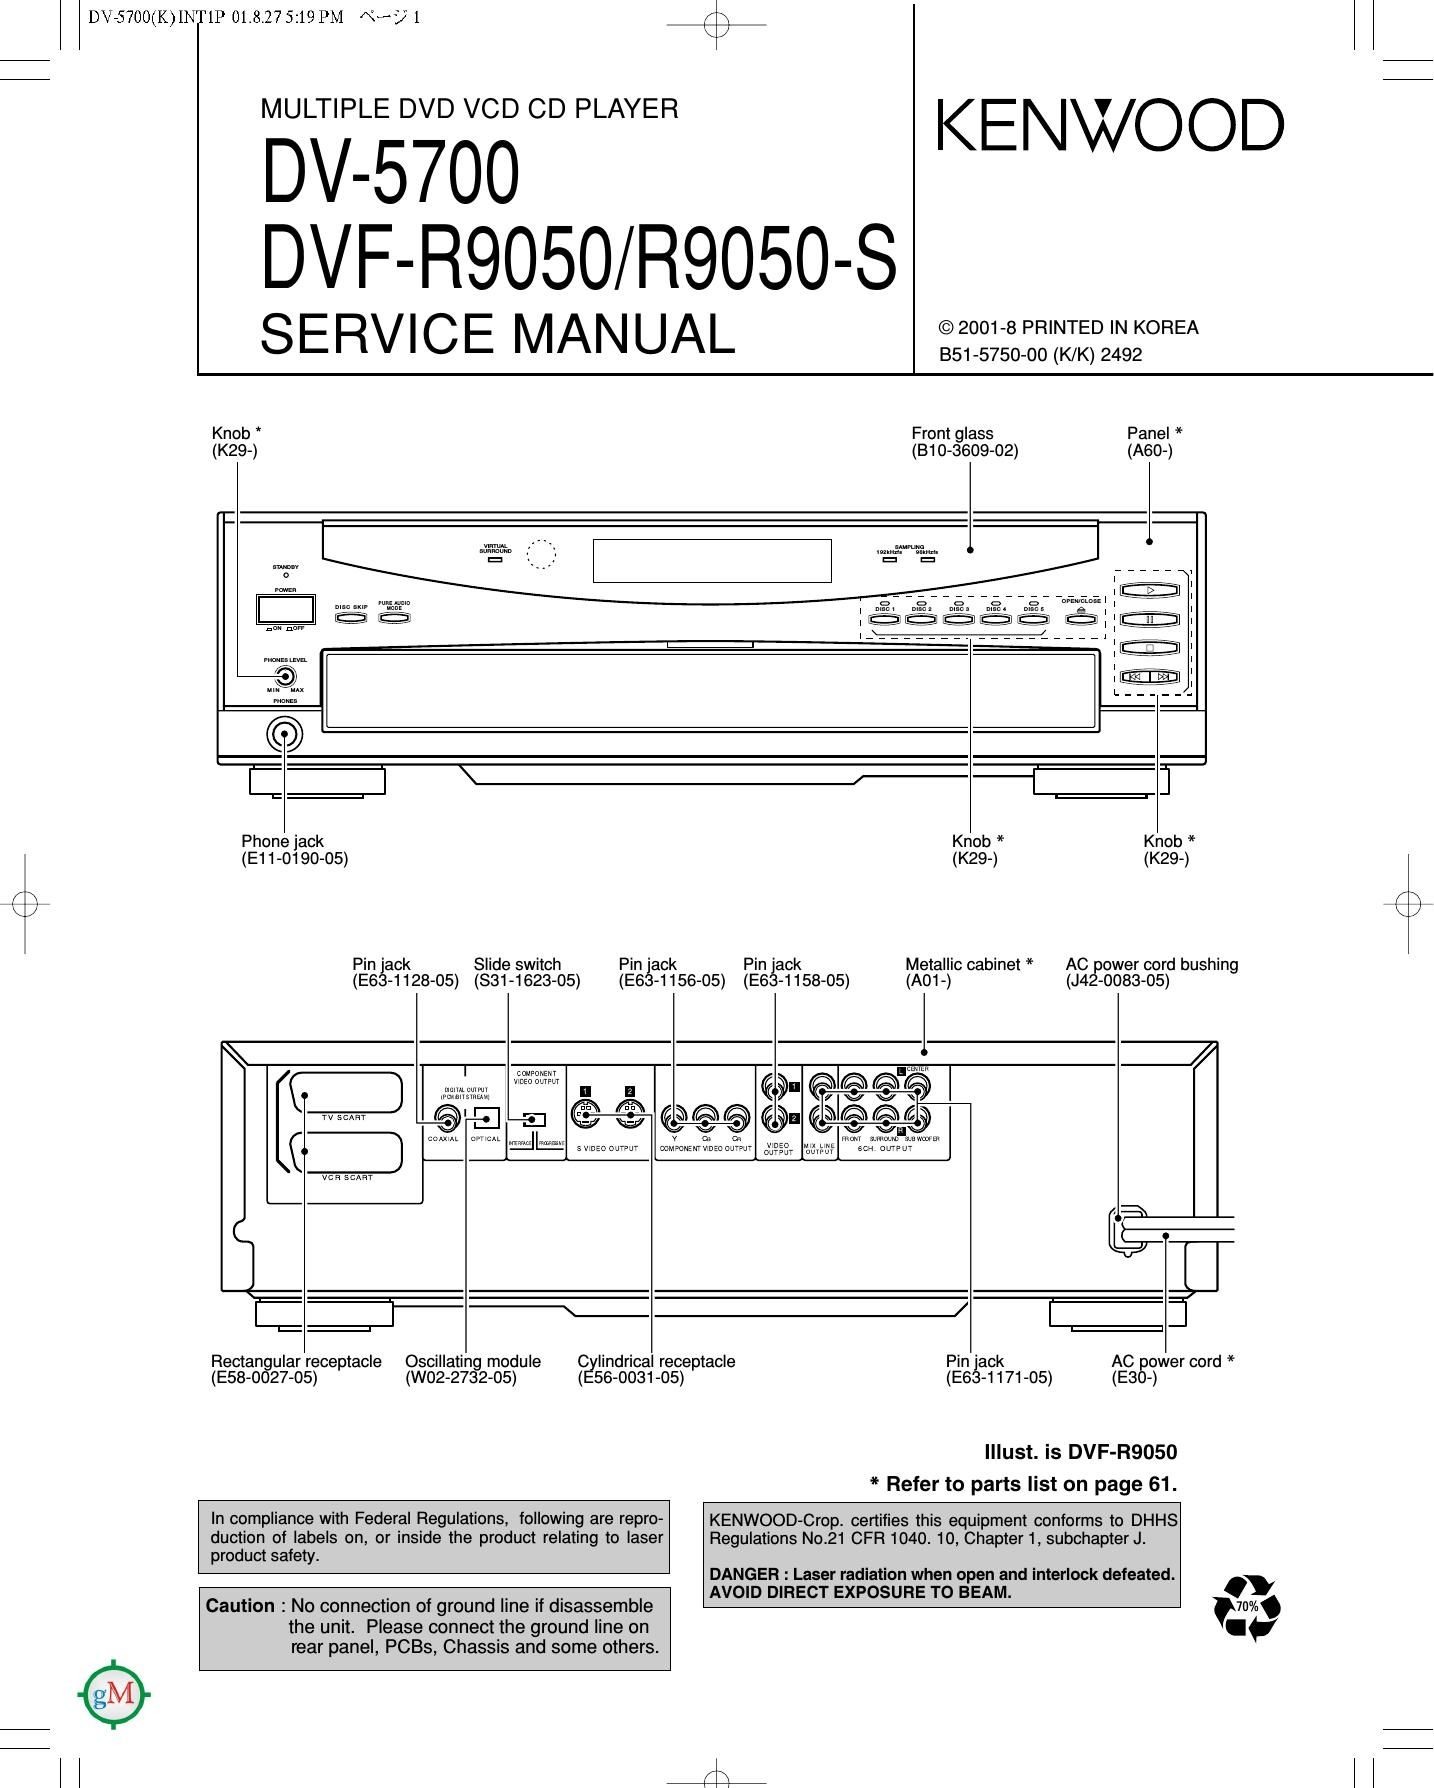 Kenwood DVFR 9050 Service Manual